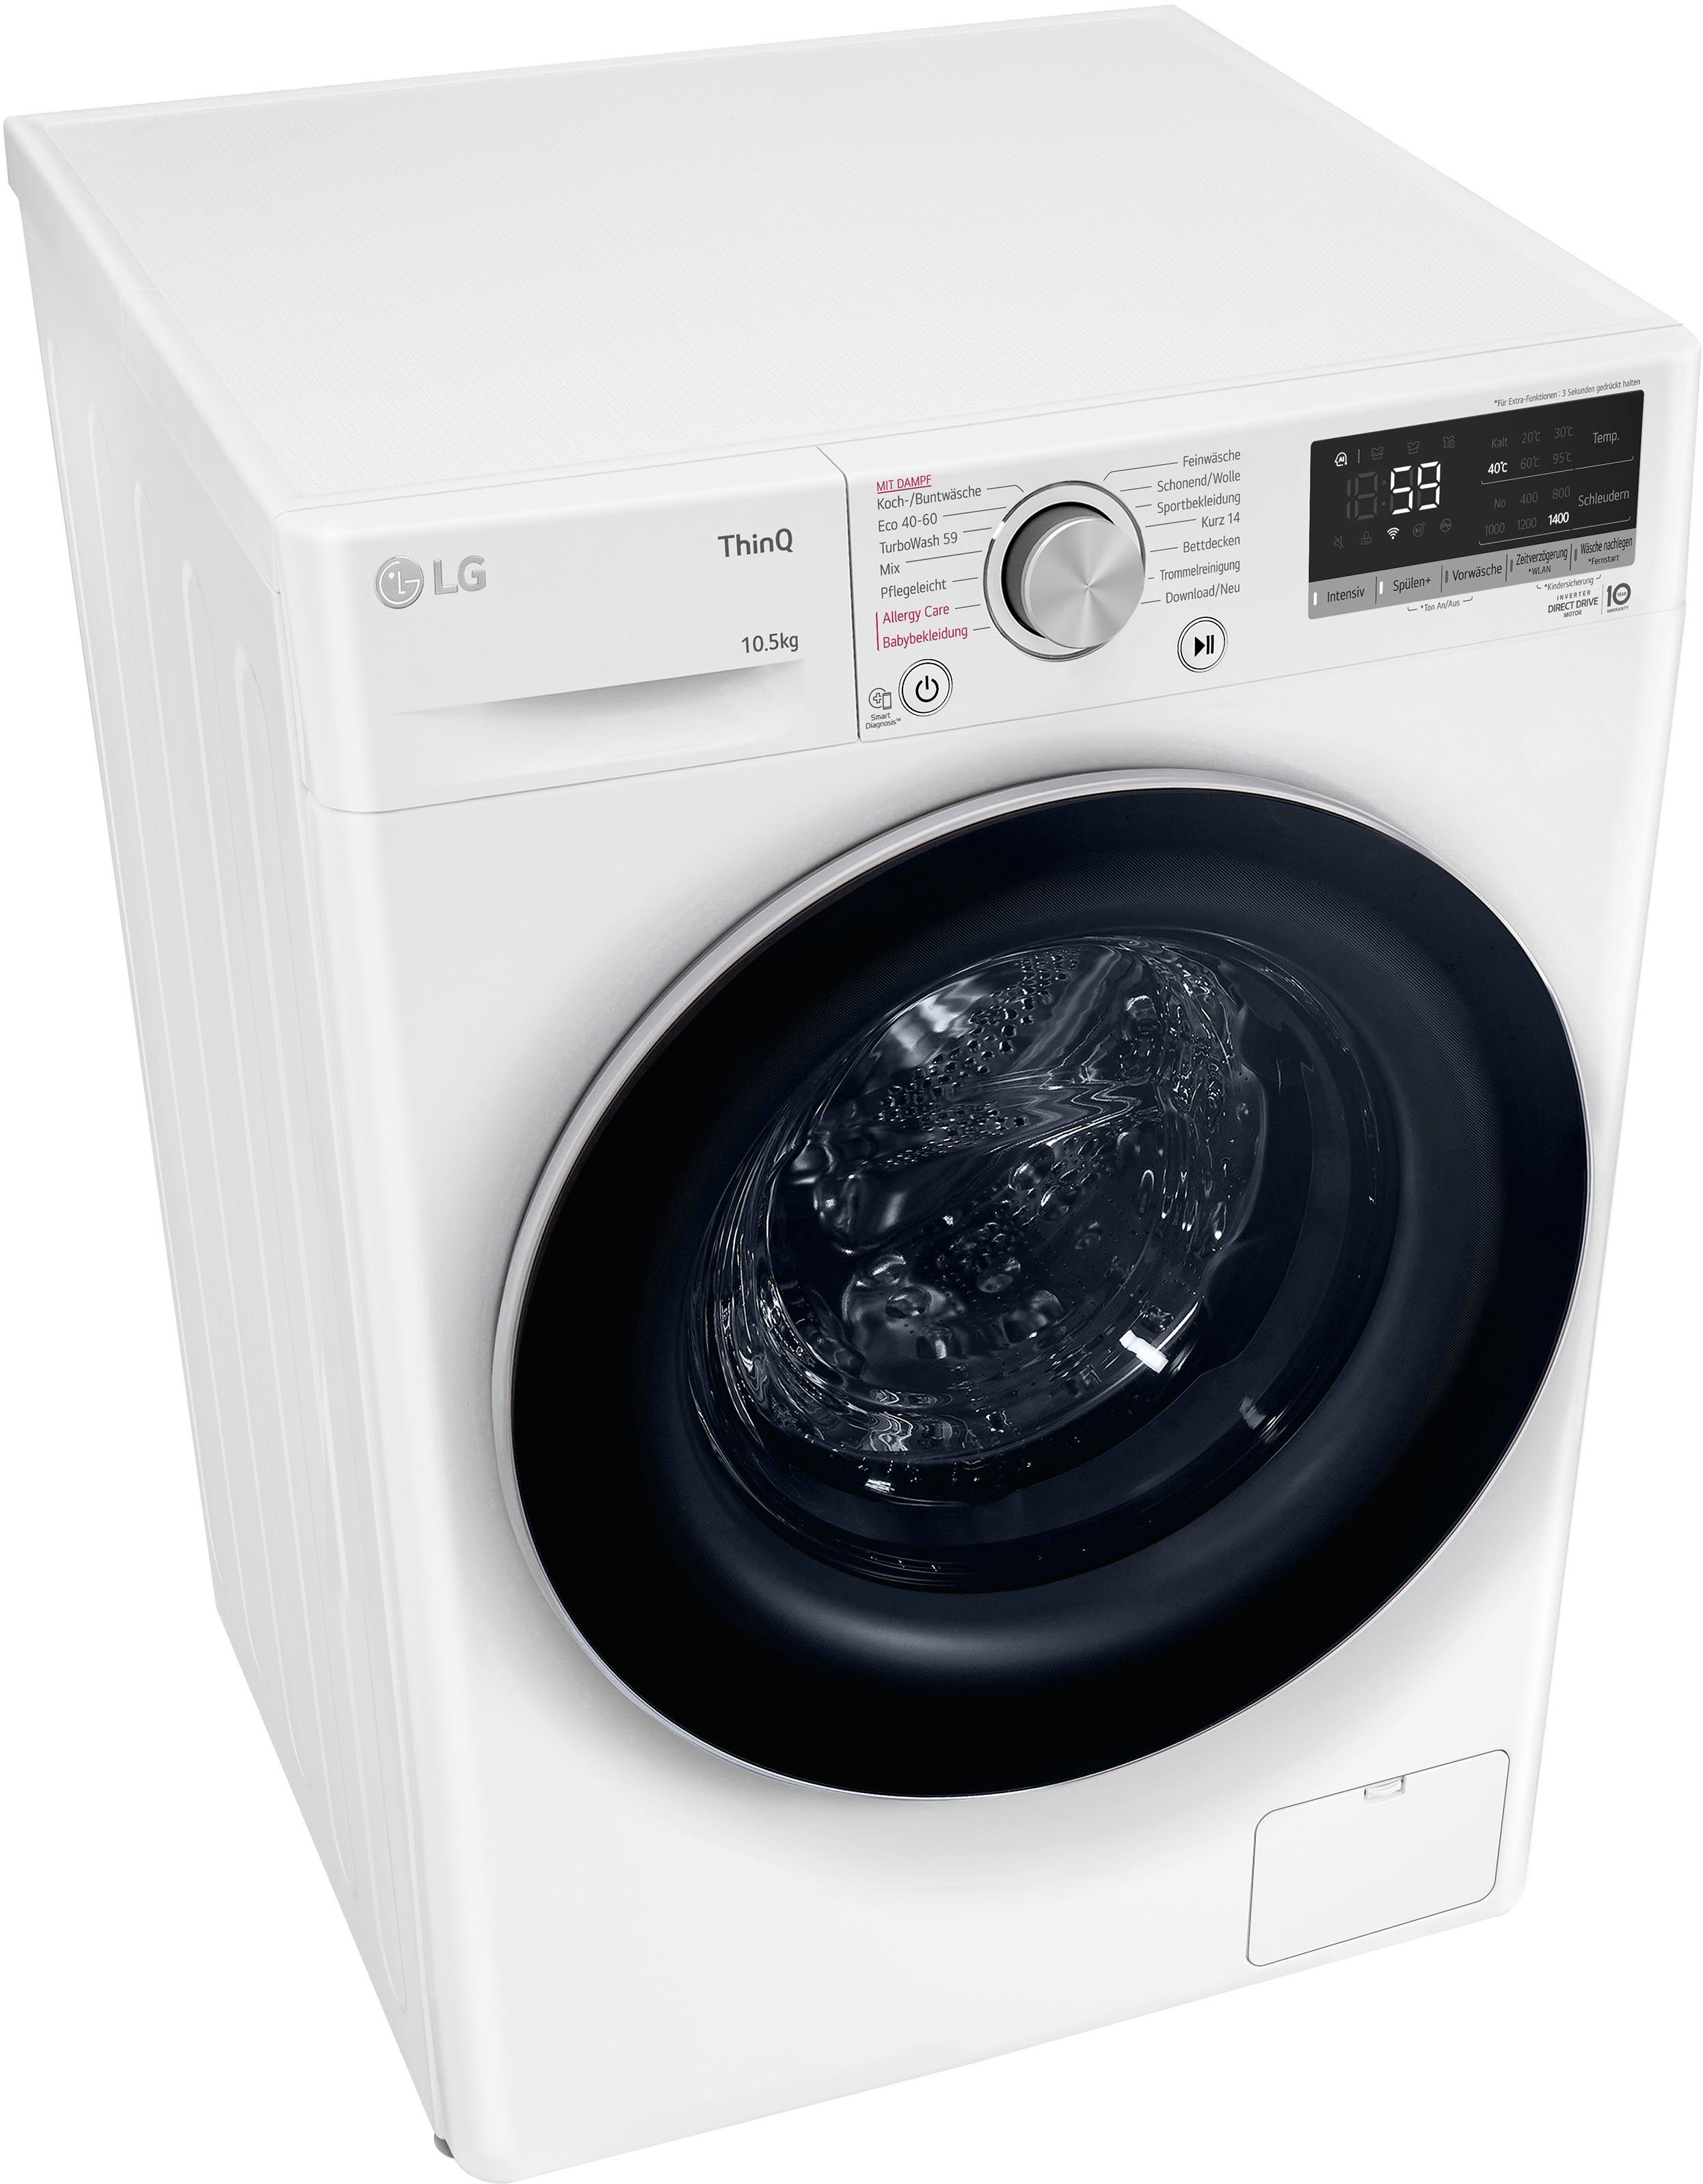 1400 Waschmaschine 10,5 U/min F4WV70X1, kg, LG